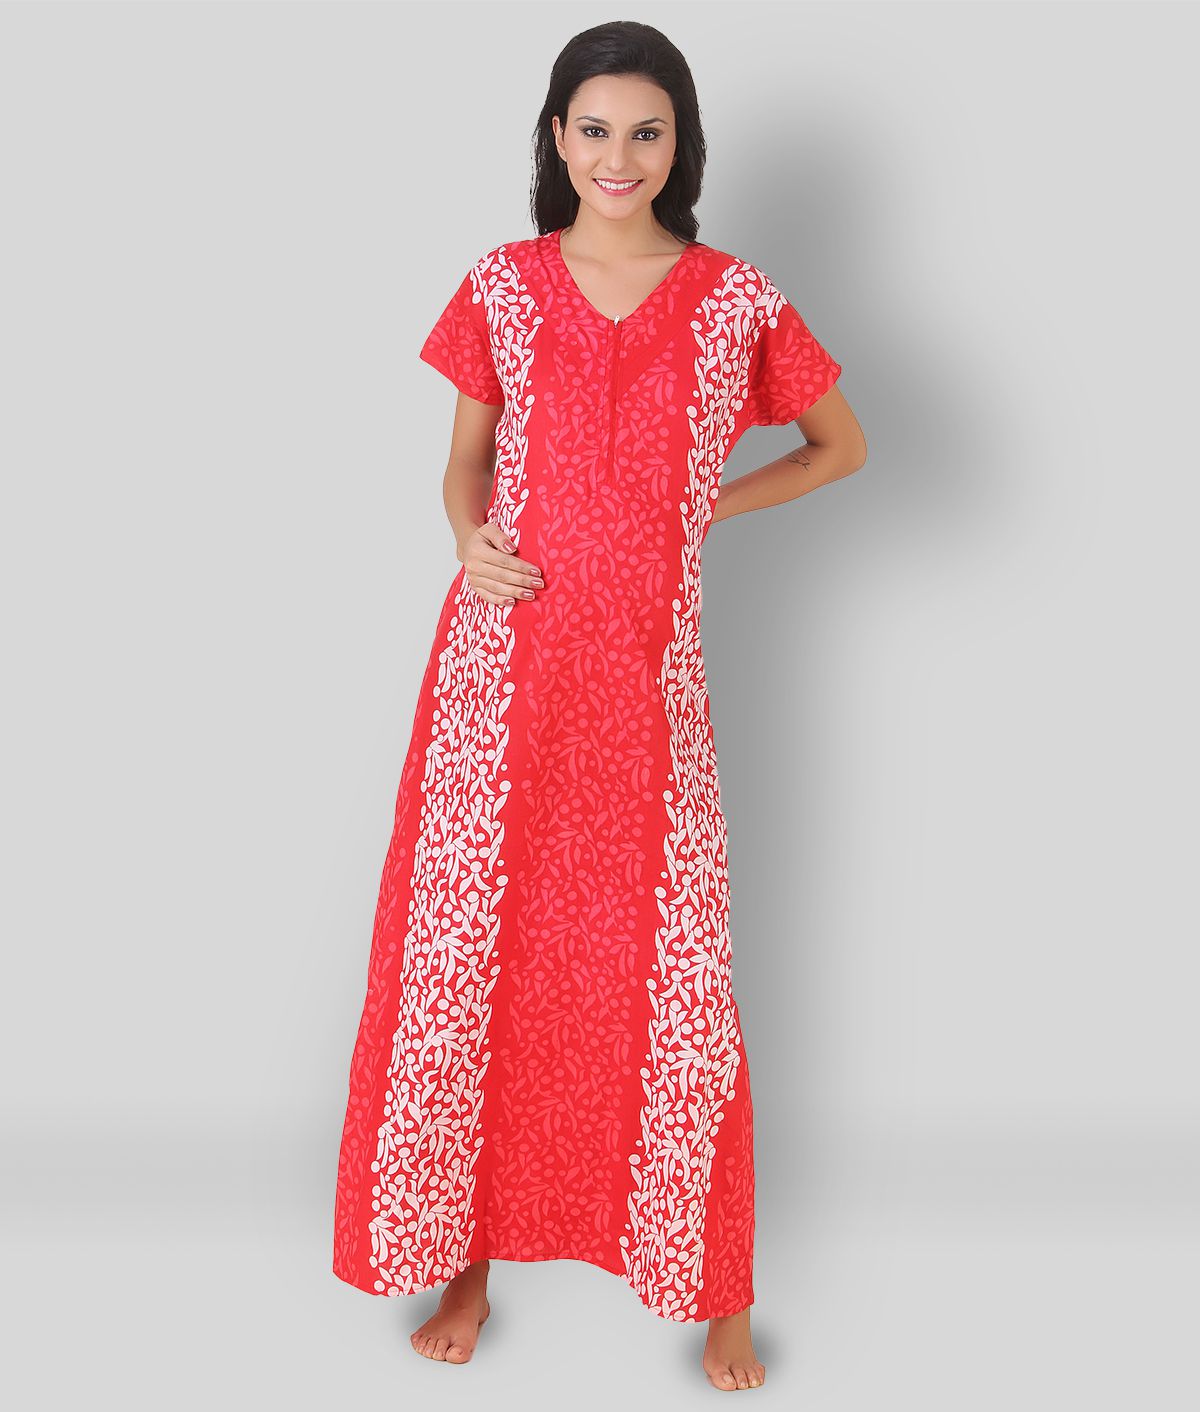     			Masha - Red Cotton Women's Nightwear Nighty & Night Gowns